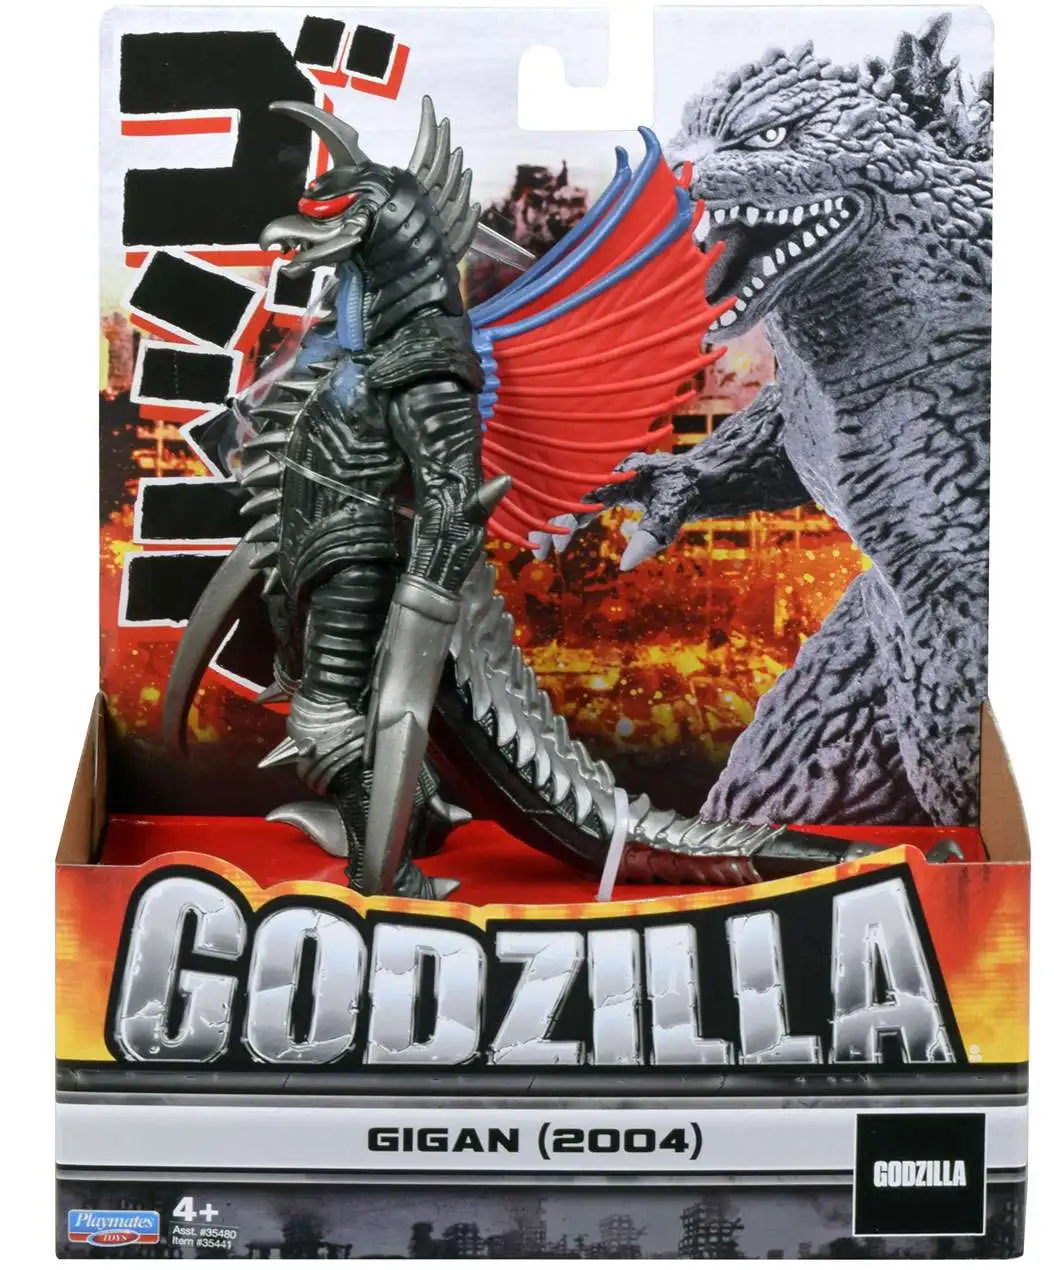 2004 7 Inch Action Figure Playmates Godzilla Gigan 